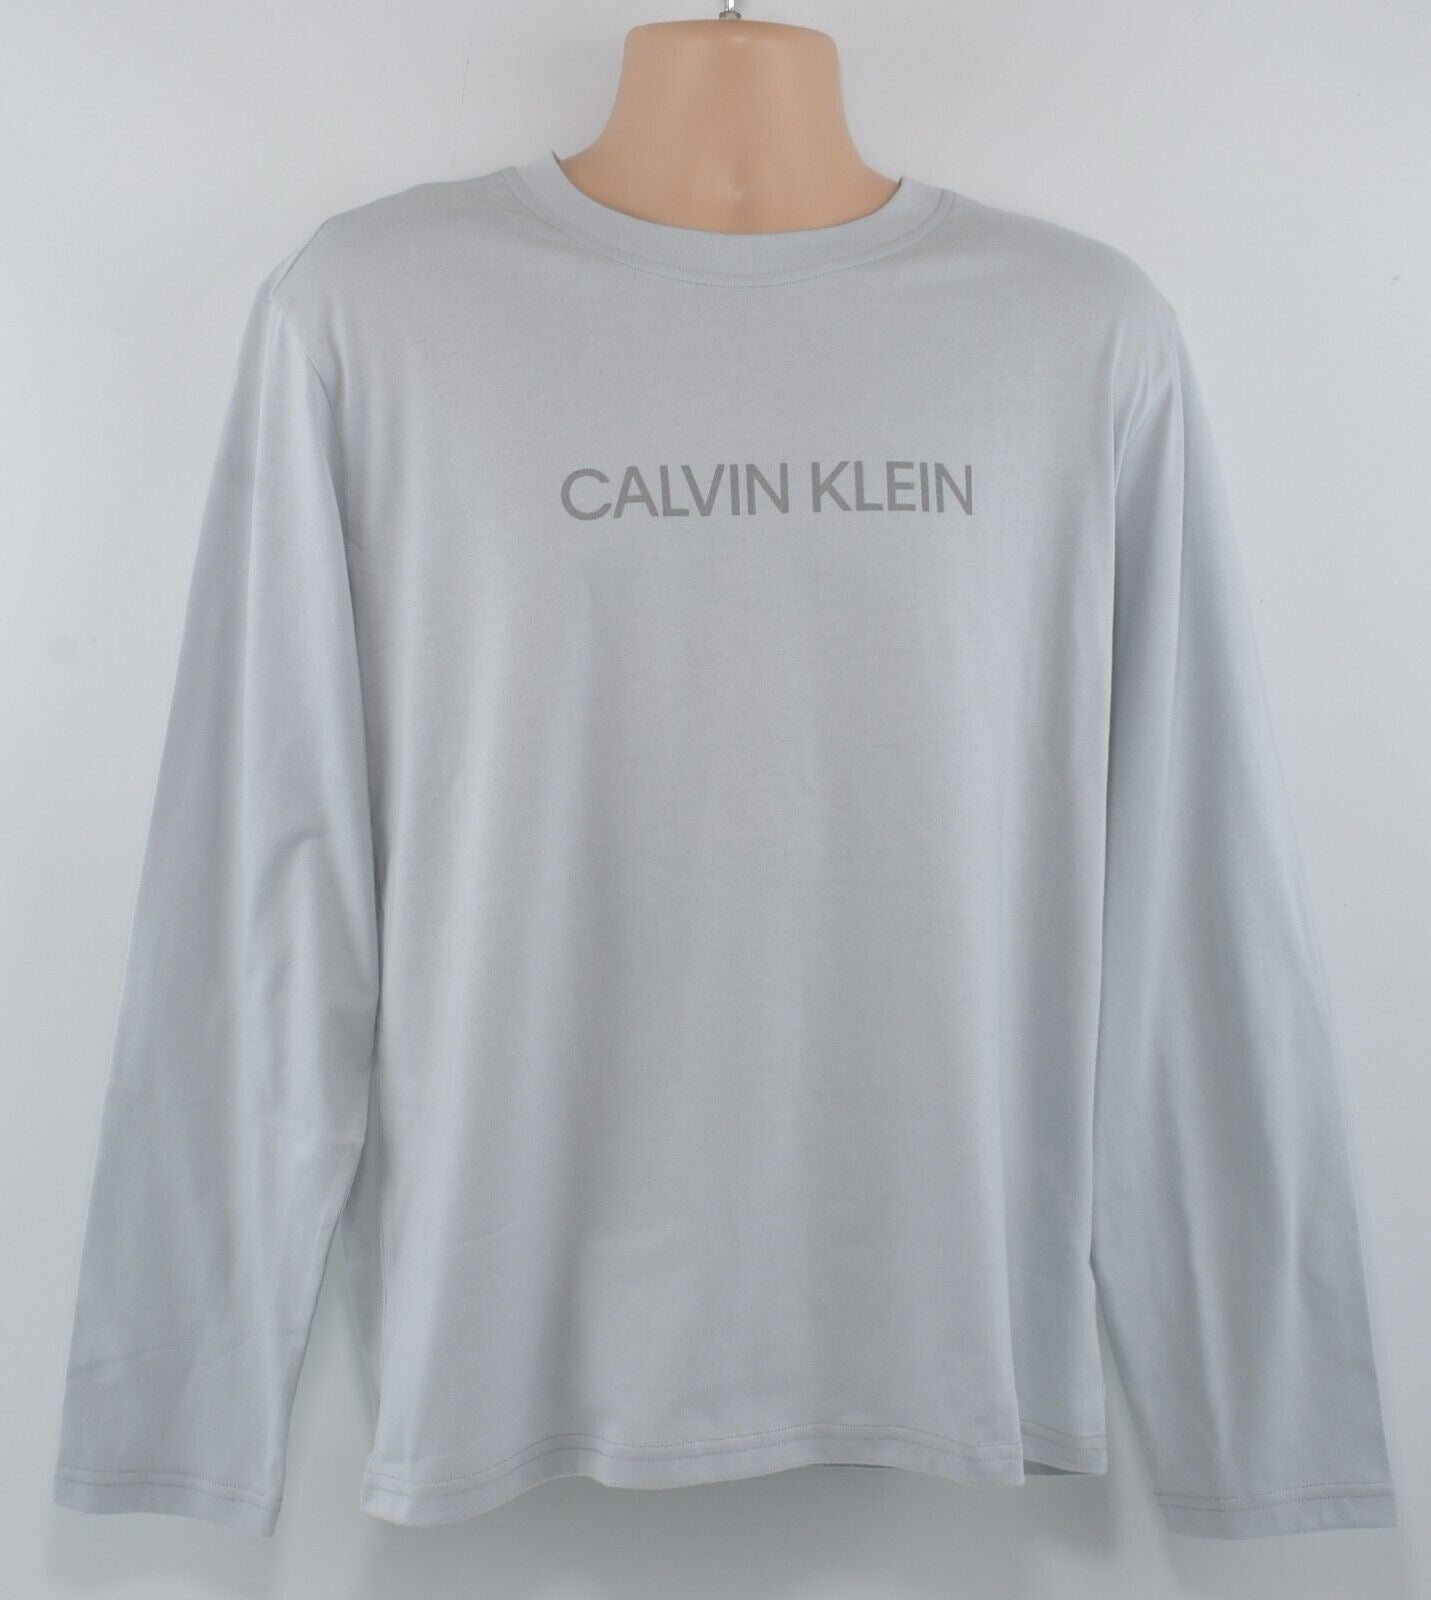 CALVIN KLEIN Performance: Men's Long Sleeve Crew Neck T-shirt Top, Grey, size L